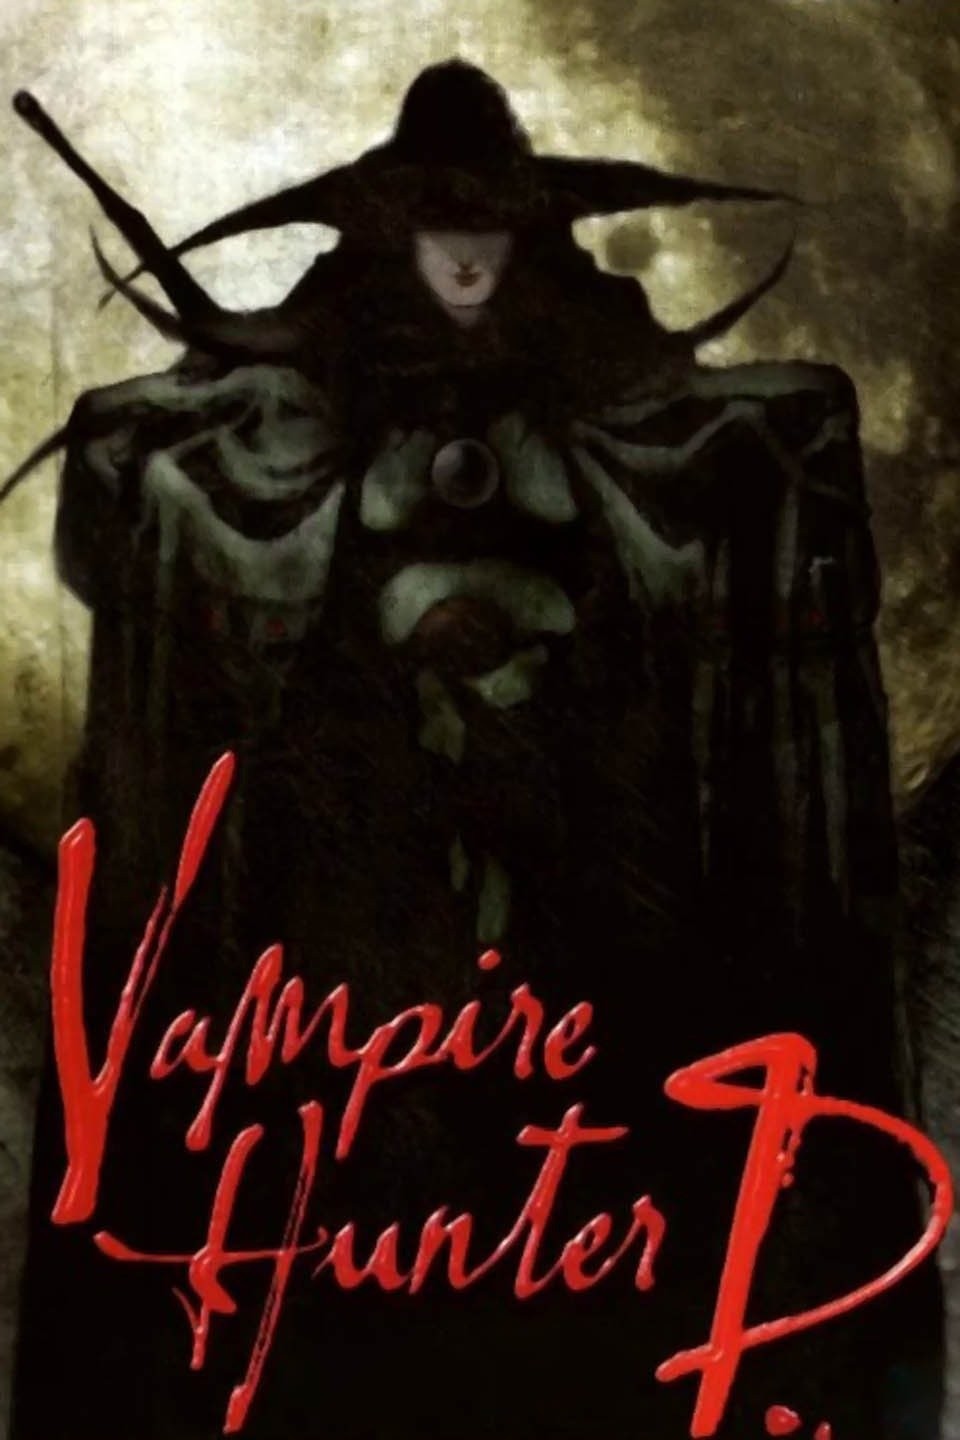 Vampire Hunter D: Bloodlust - Movie Review - The Austin Chronicle